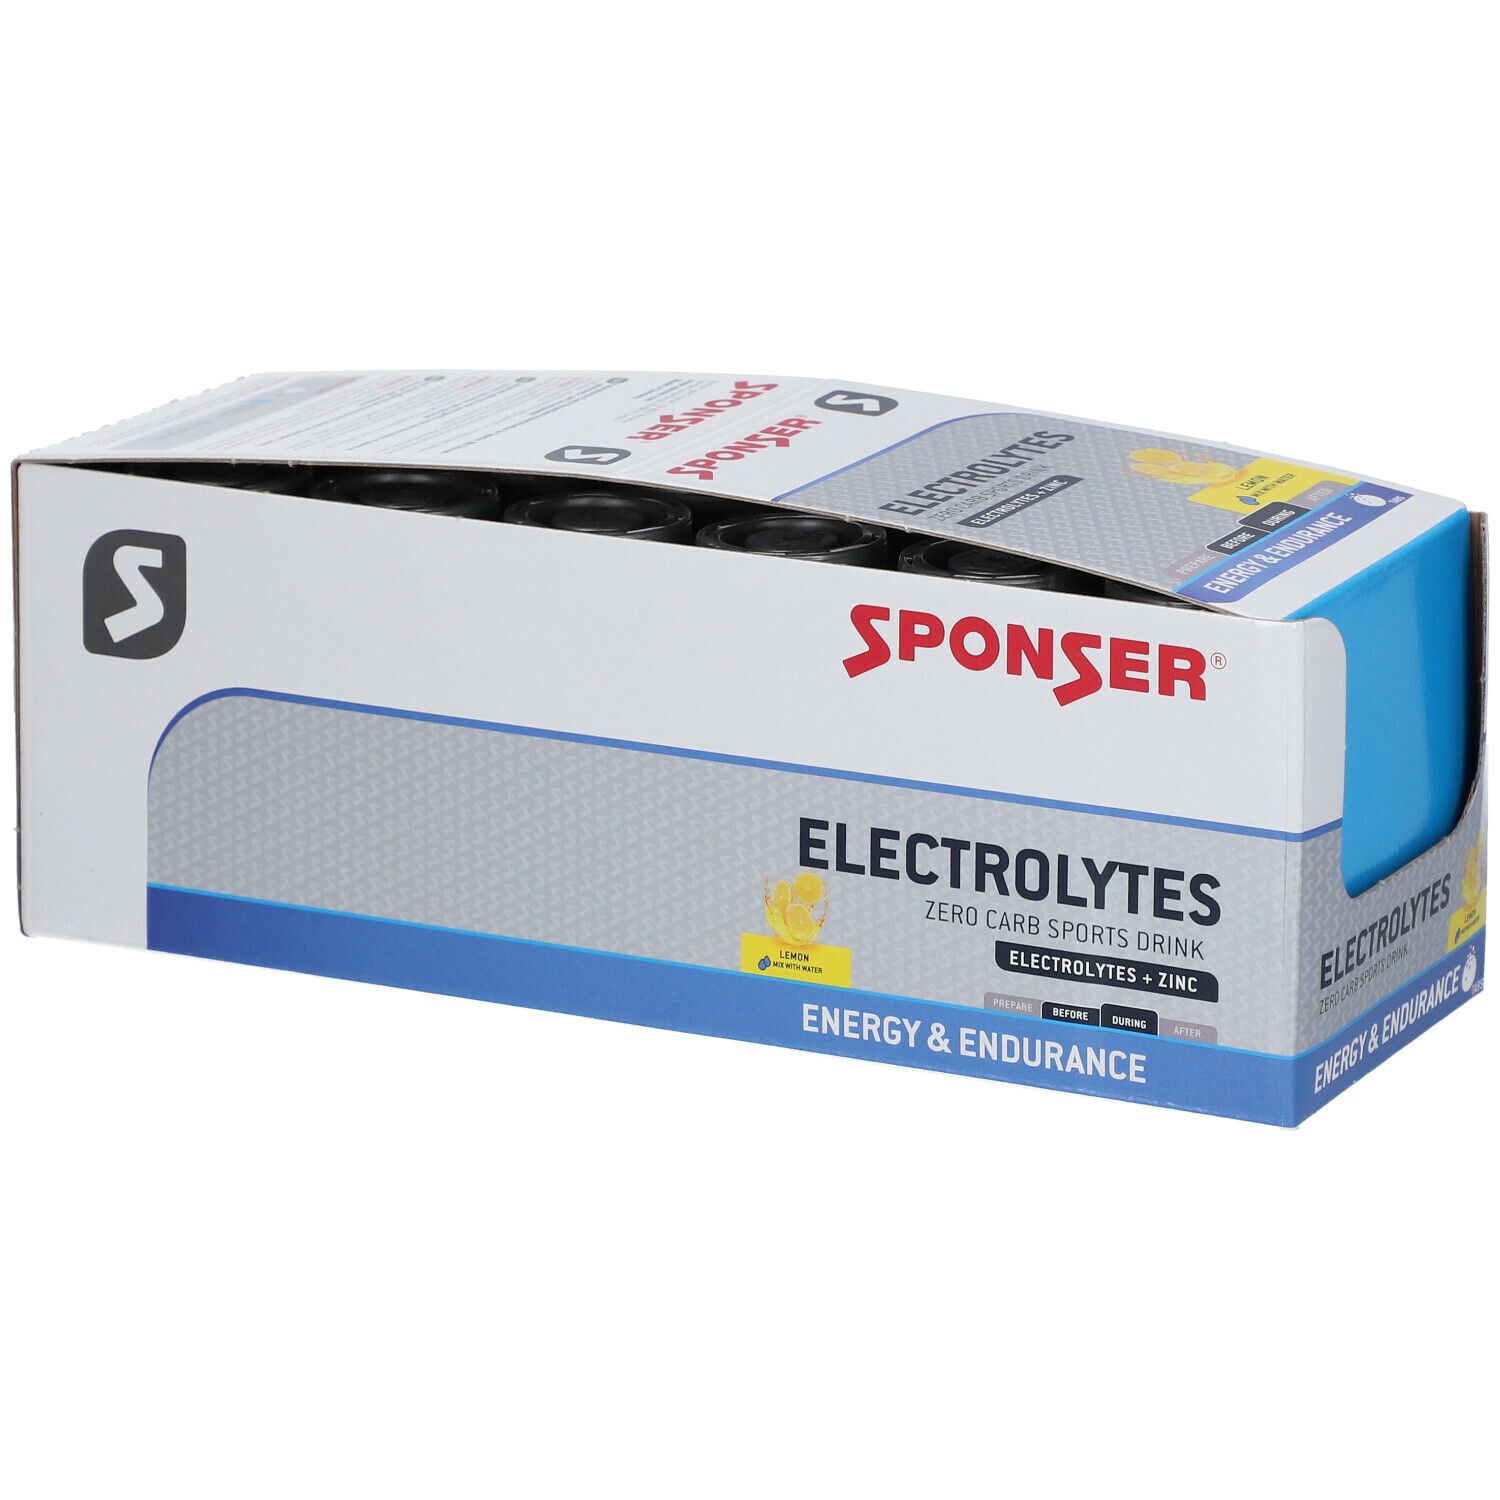 SPONSER® ELECTROLYTES, Zitrone